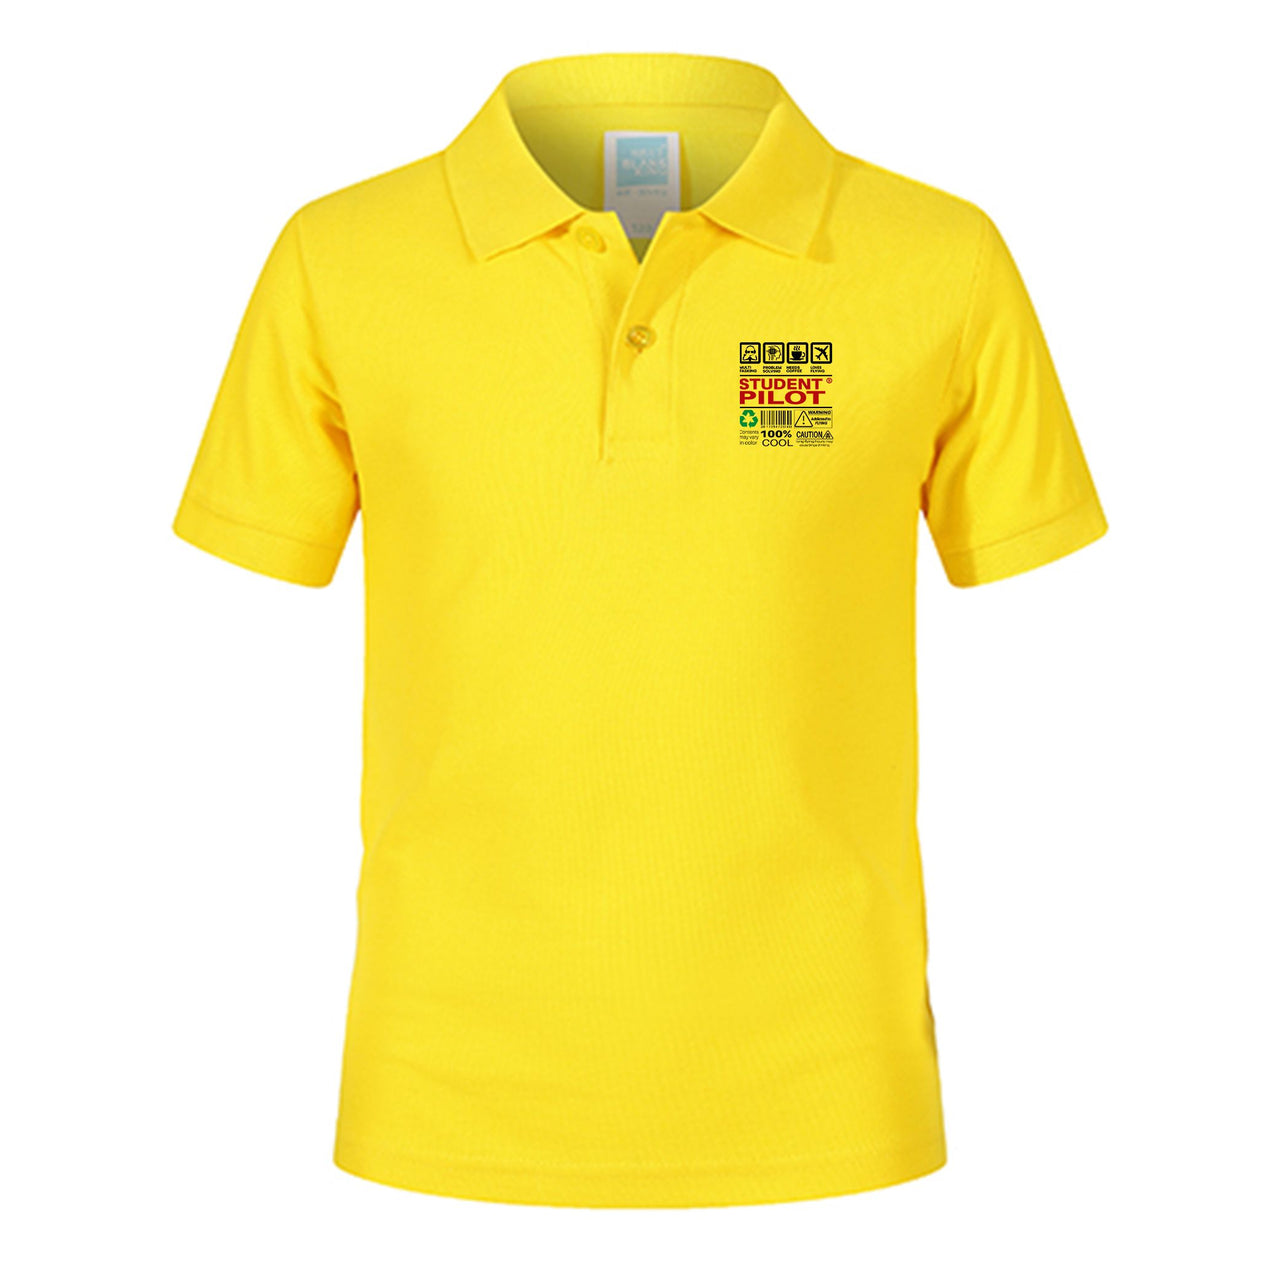 Student Pilot Label Designed Children Polo T-Shirts